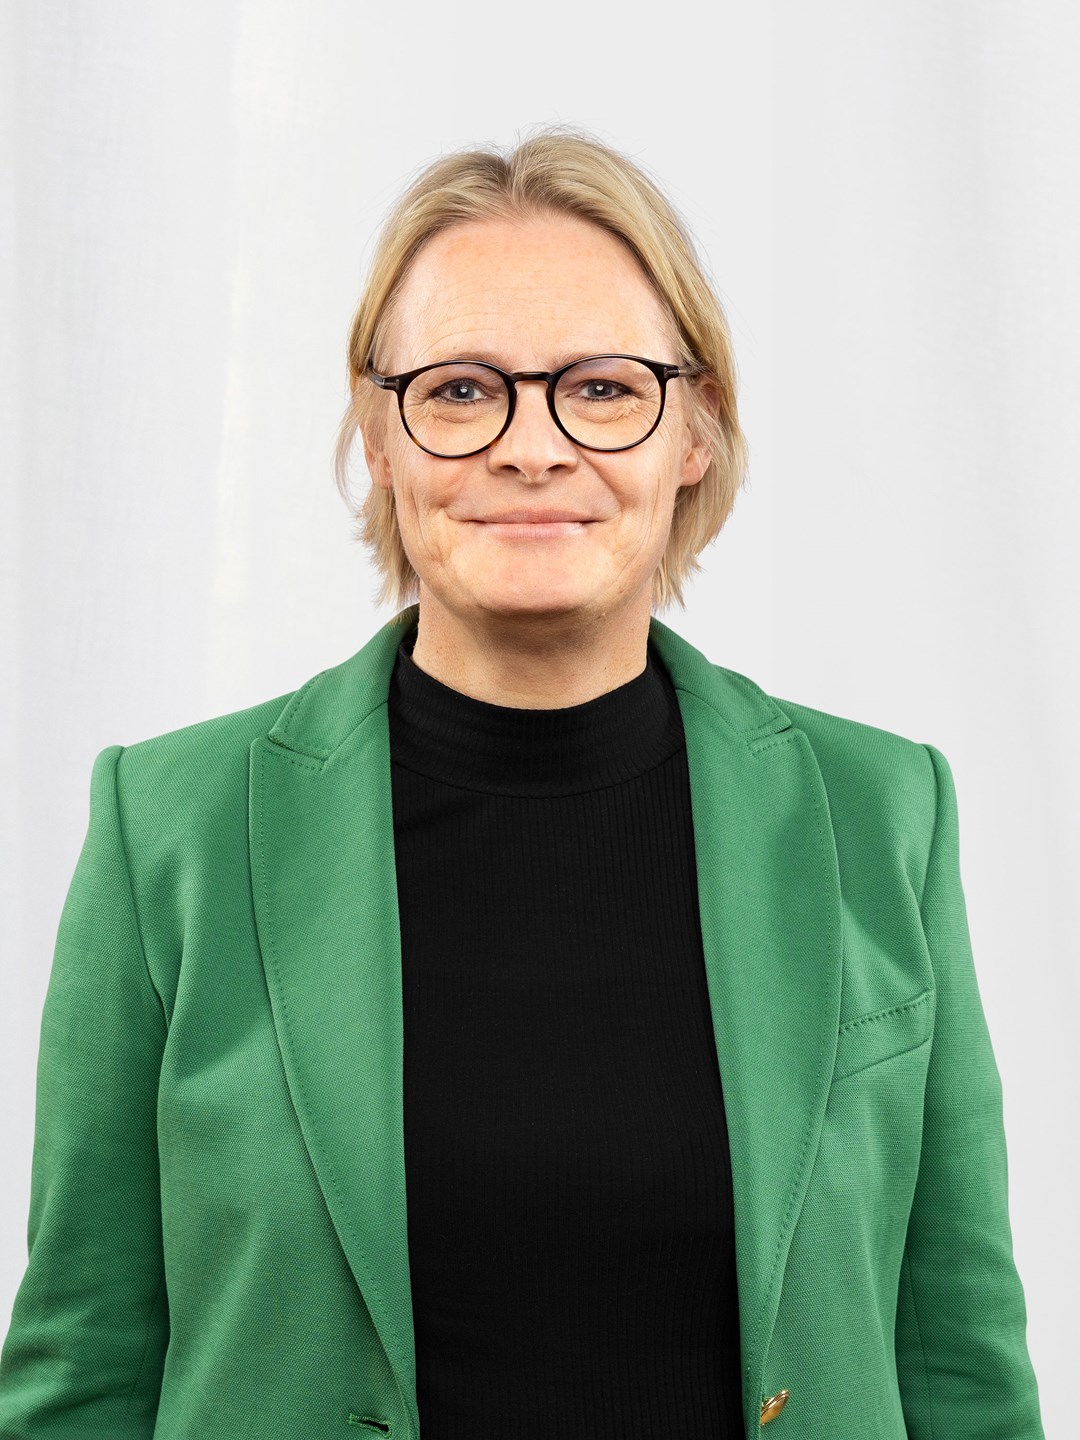 Helena Knutsson